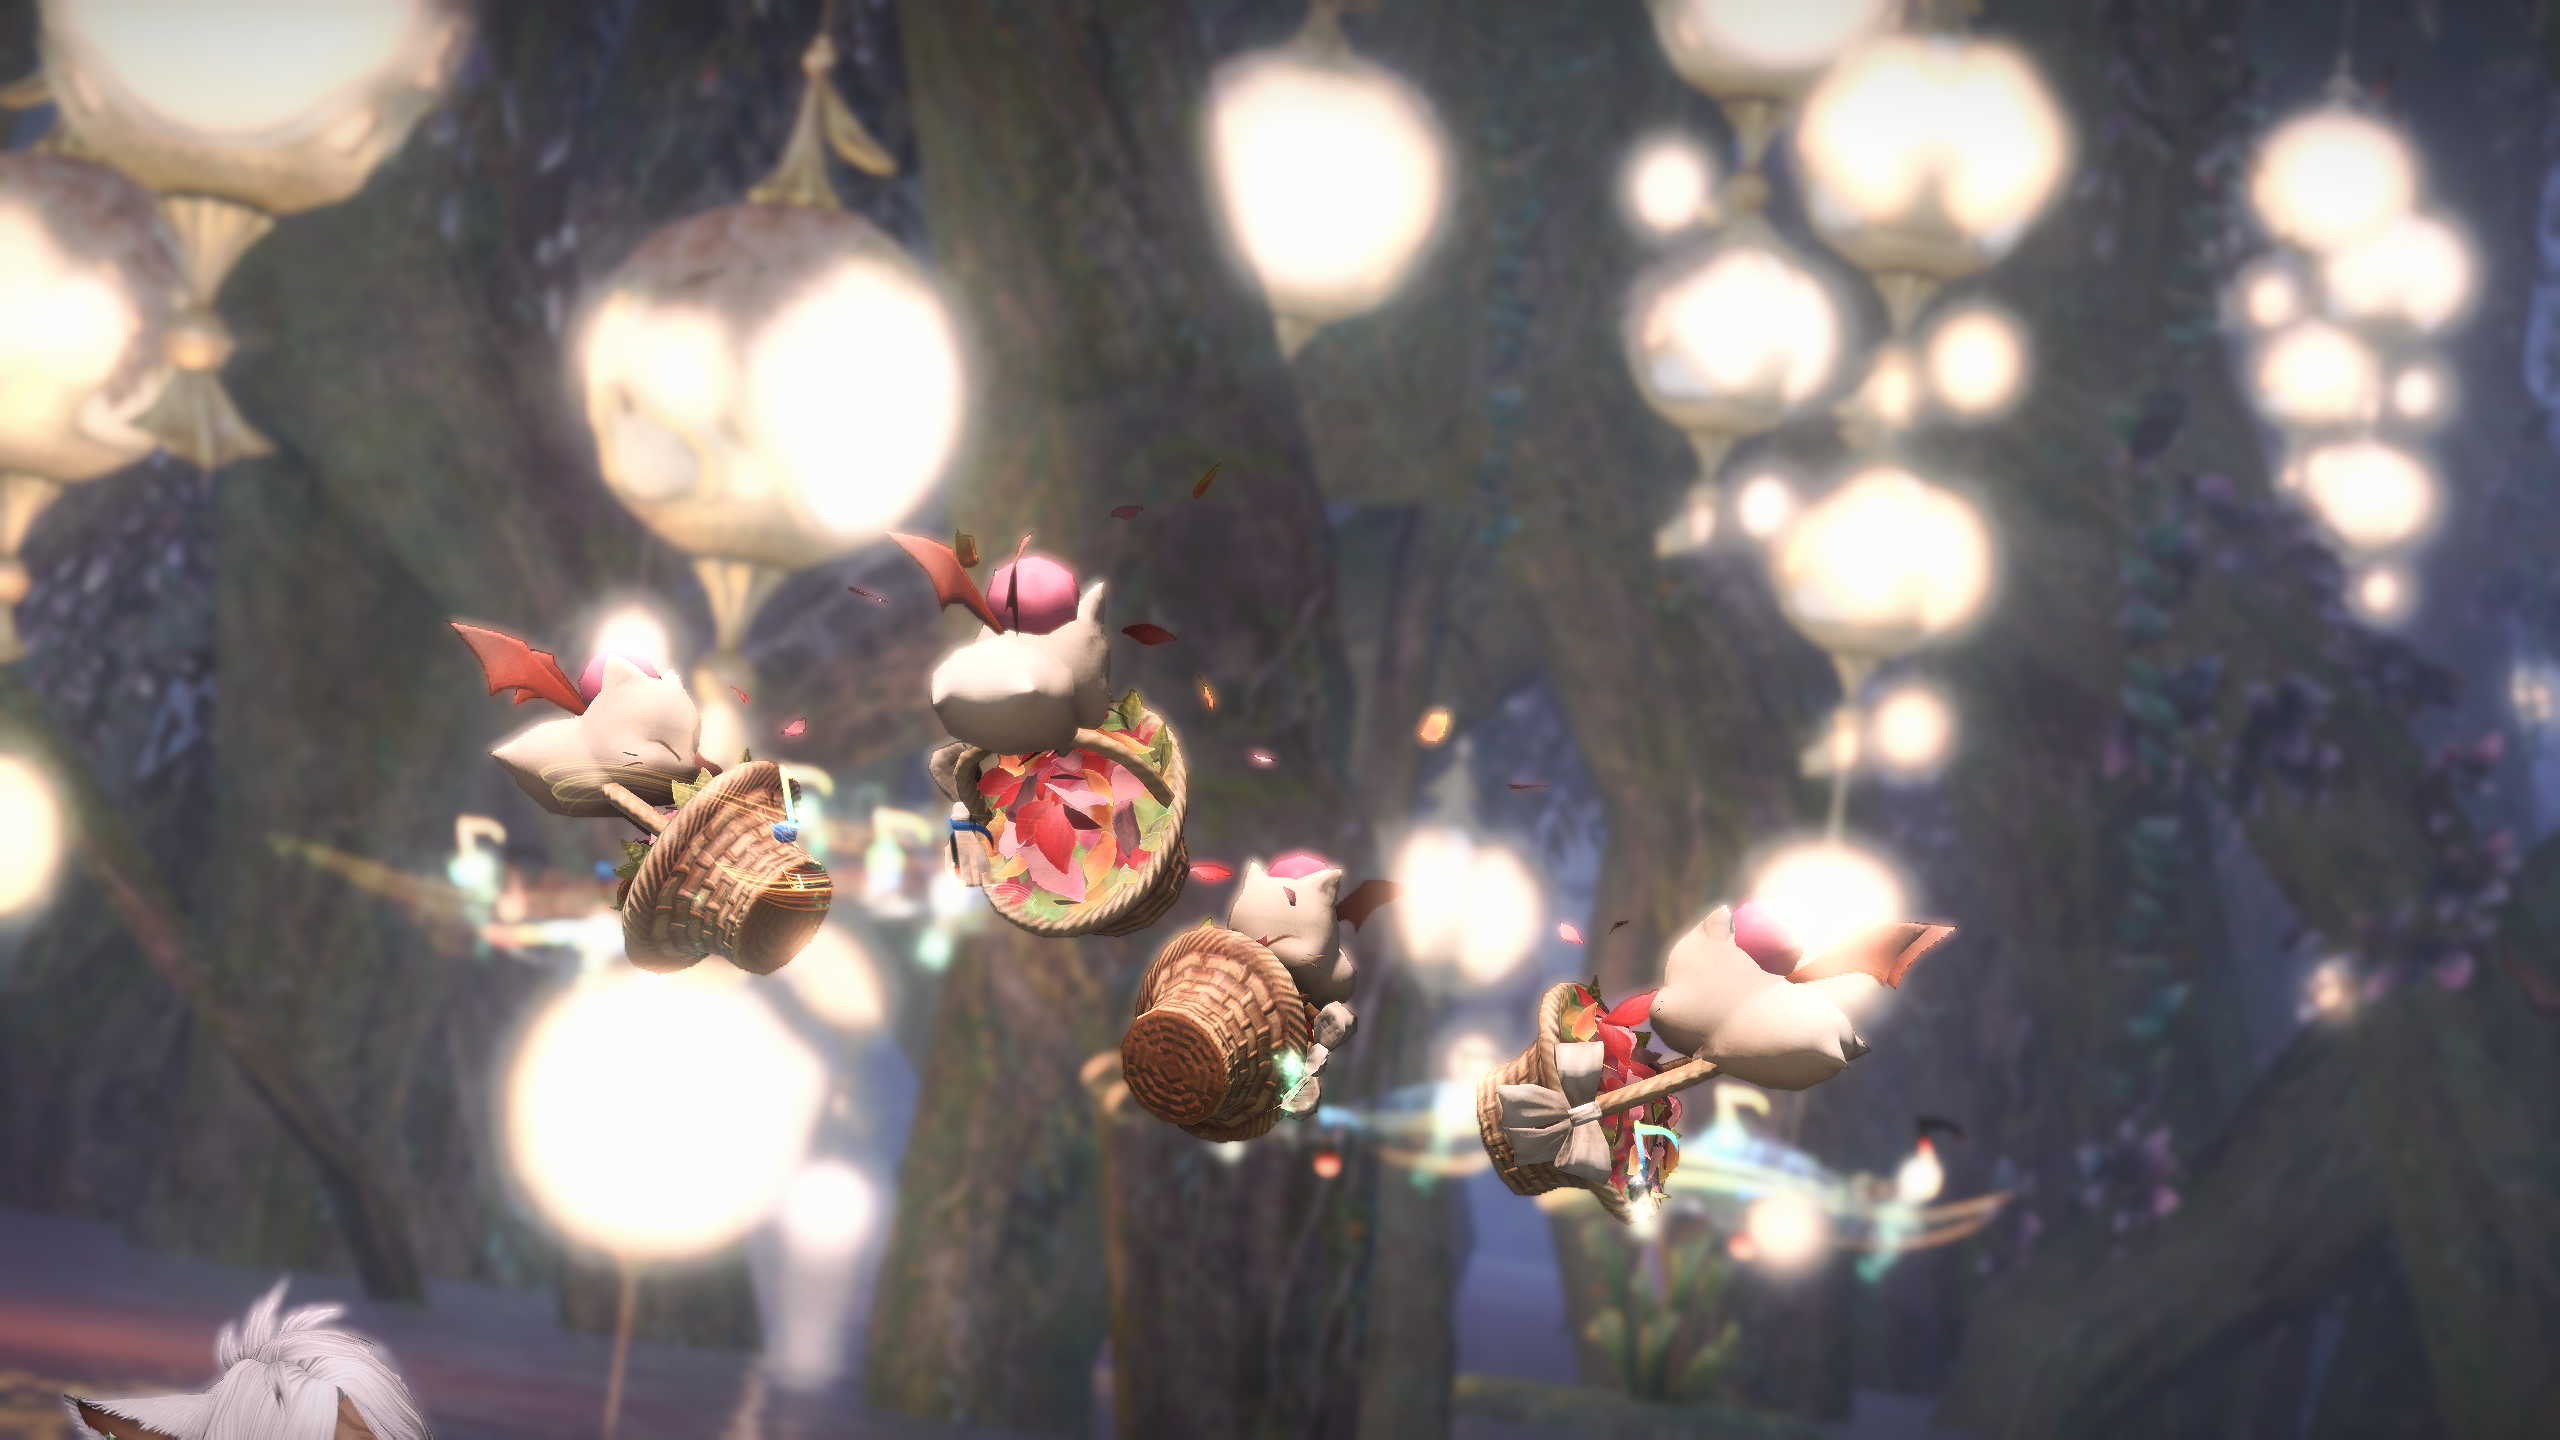 General 2560x1440 Final Fantasy XIV: A Realm Reborn reshade video games CGI trees lights